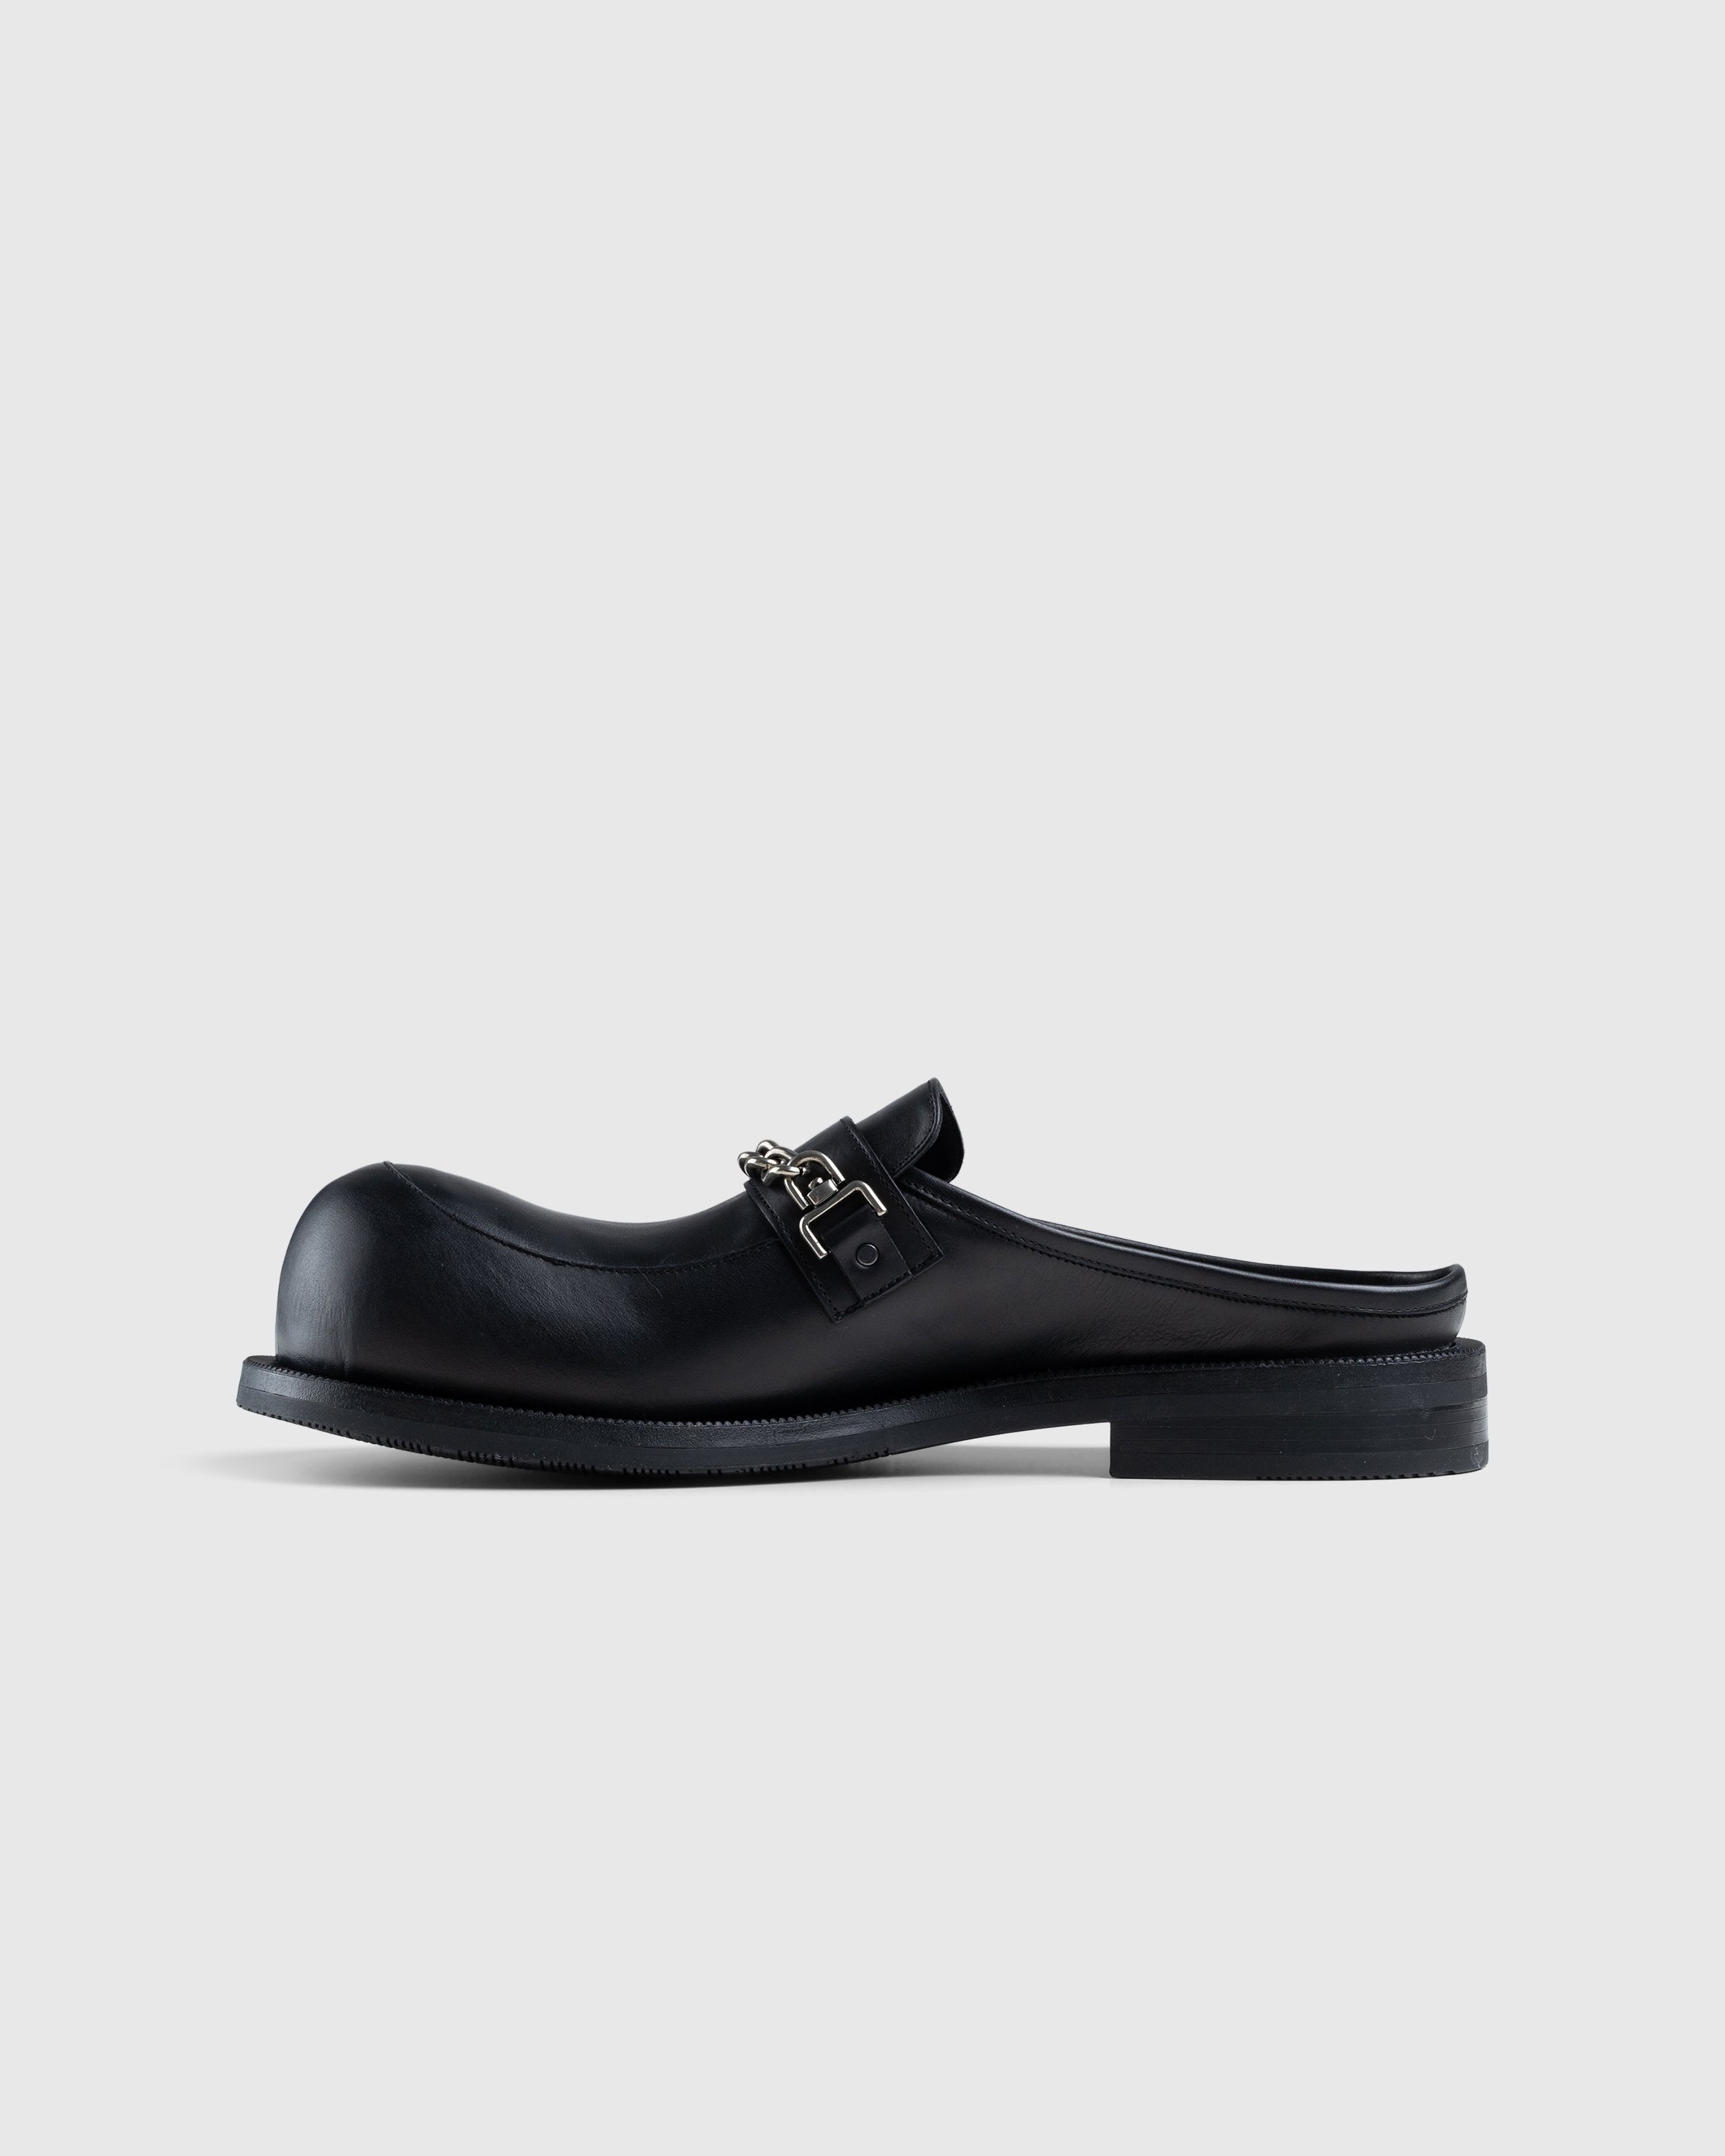 Martine Rose – Bulb Toe Chain Mule Black - Sandals & Slides - Black - Image 2